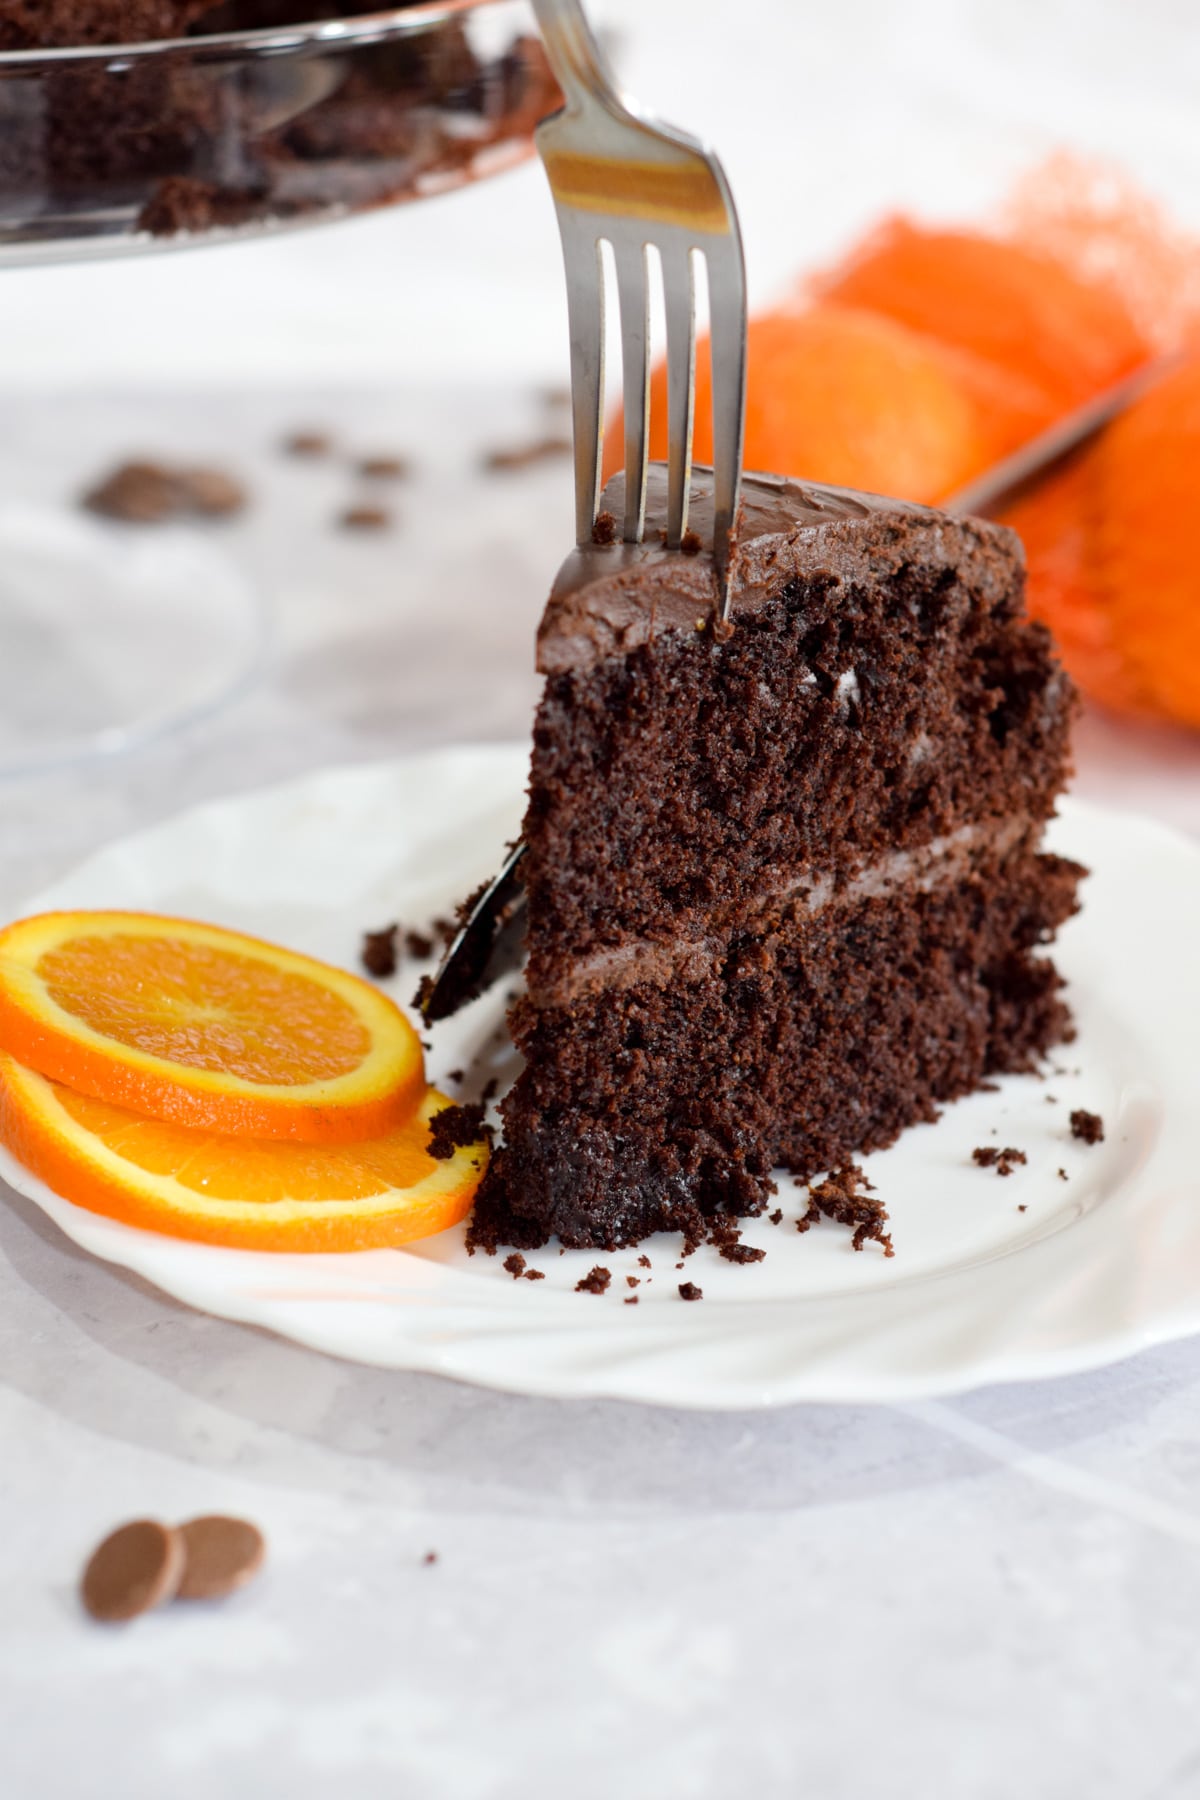 Chocolate orange cake slice with chocolate orange ganache